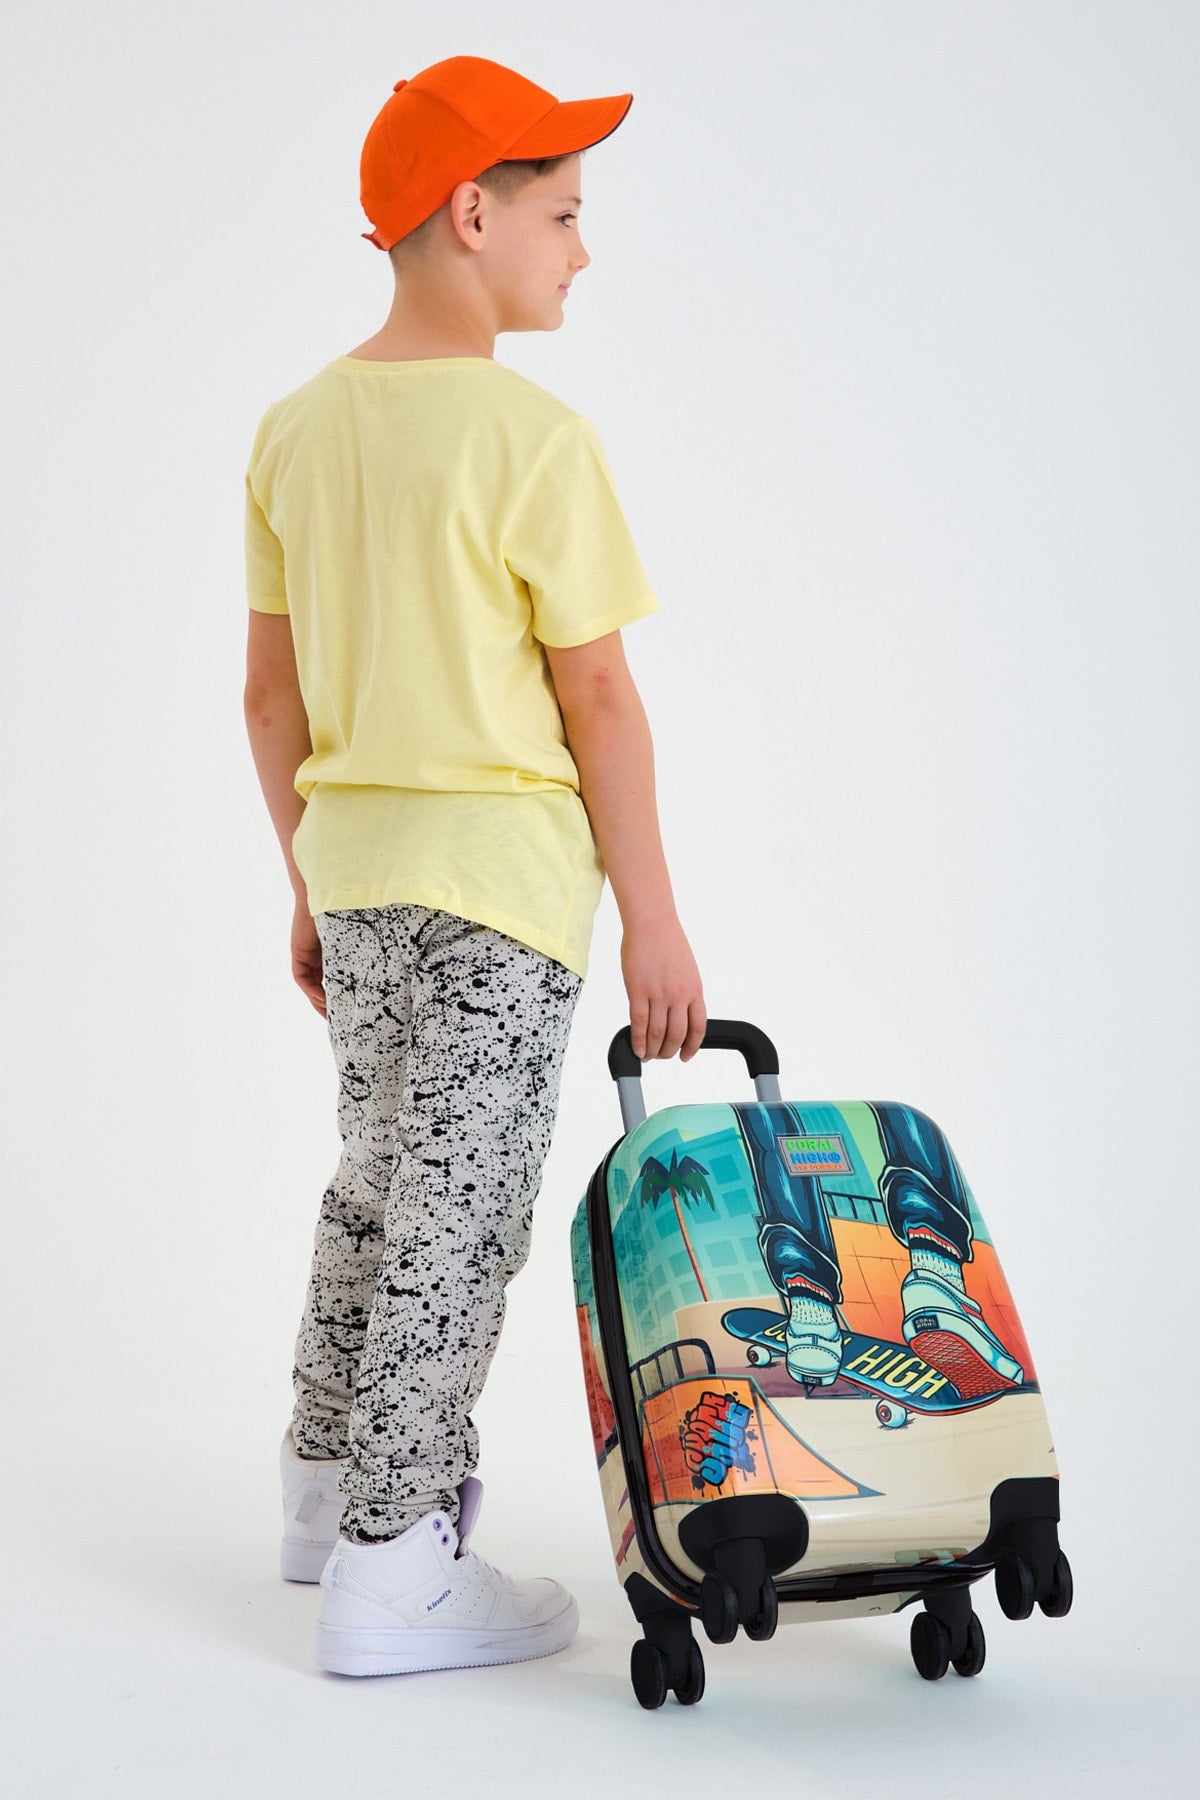 Kids Indigo Neon Orange Skateboard Patterned Child Suitcase 16742